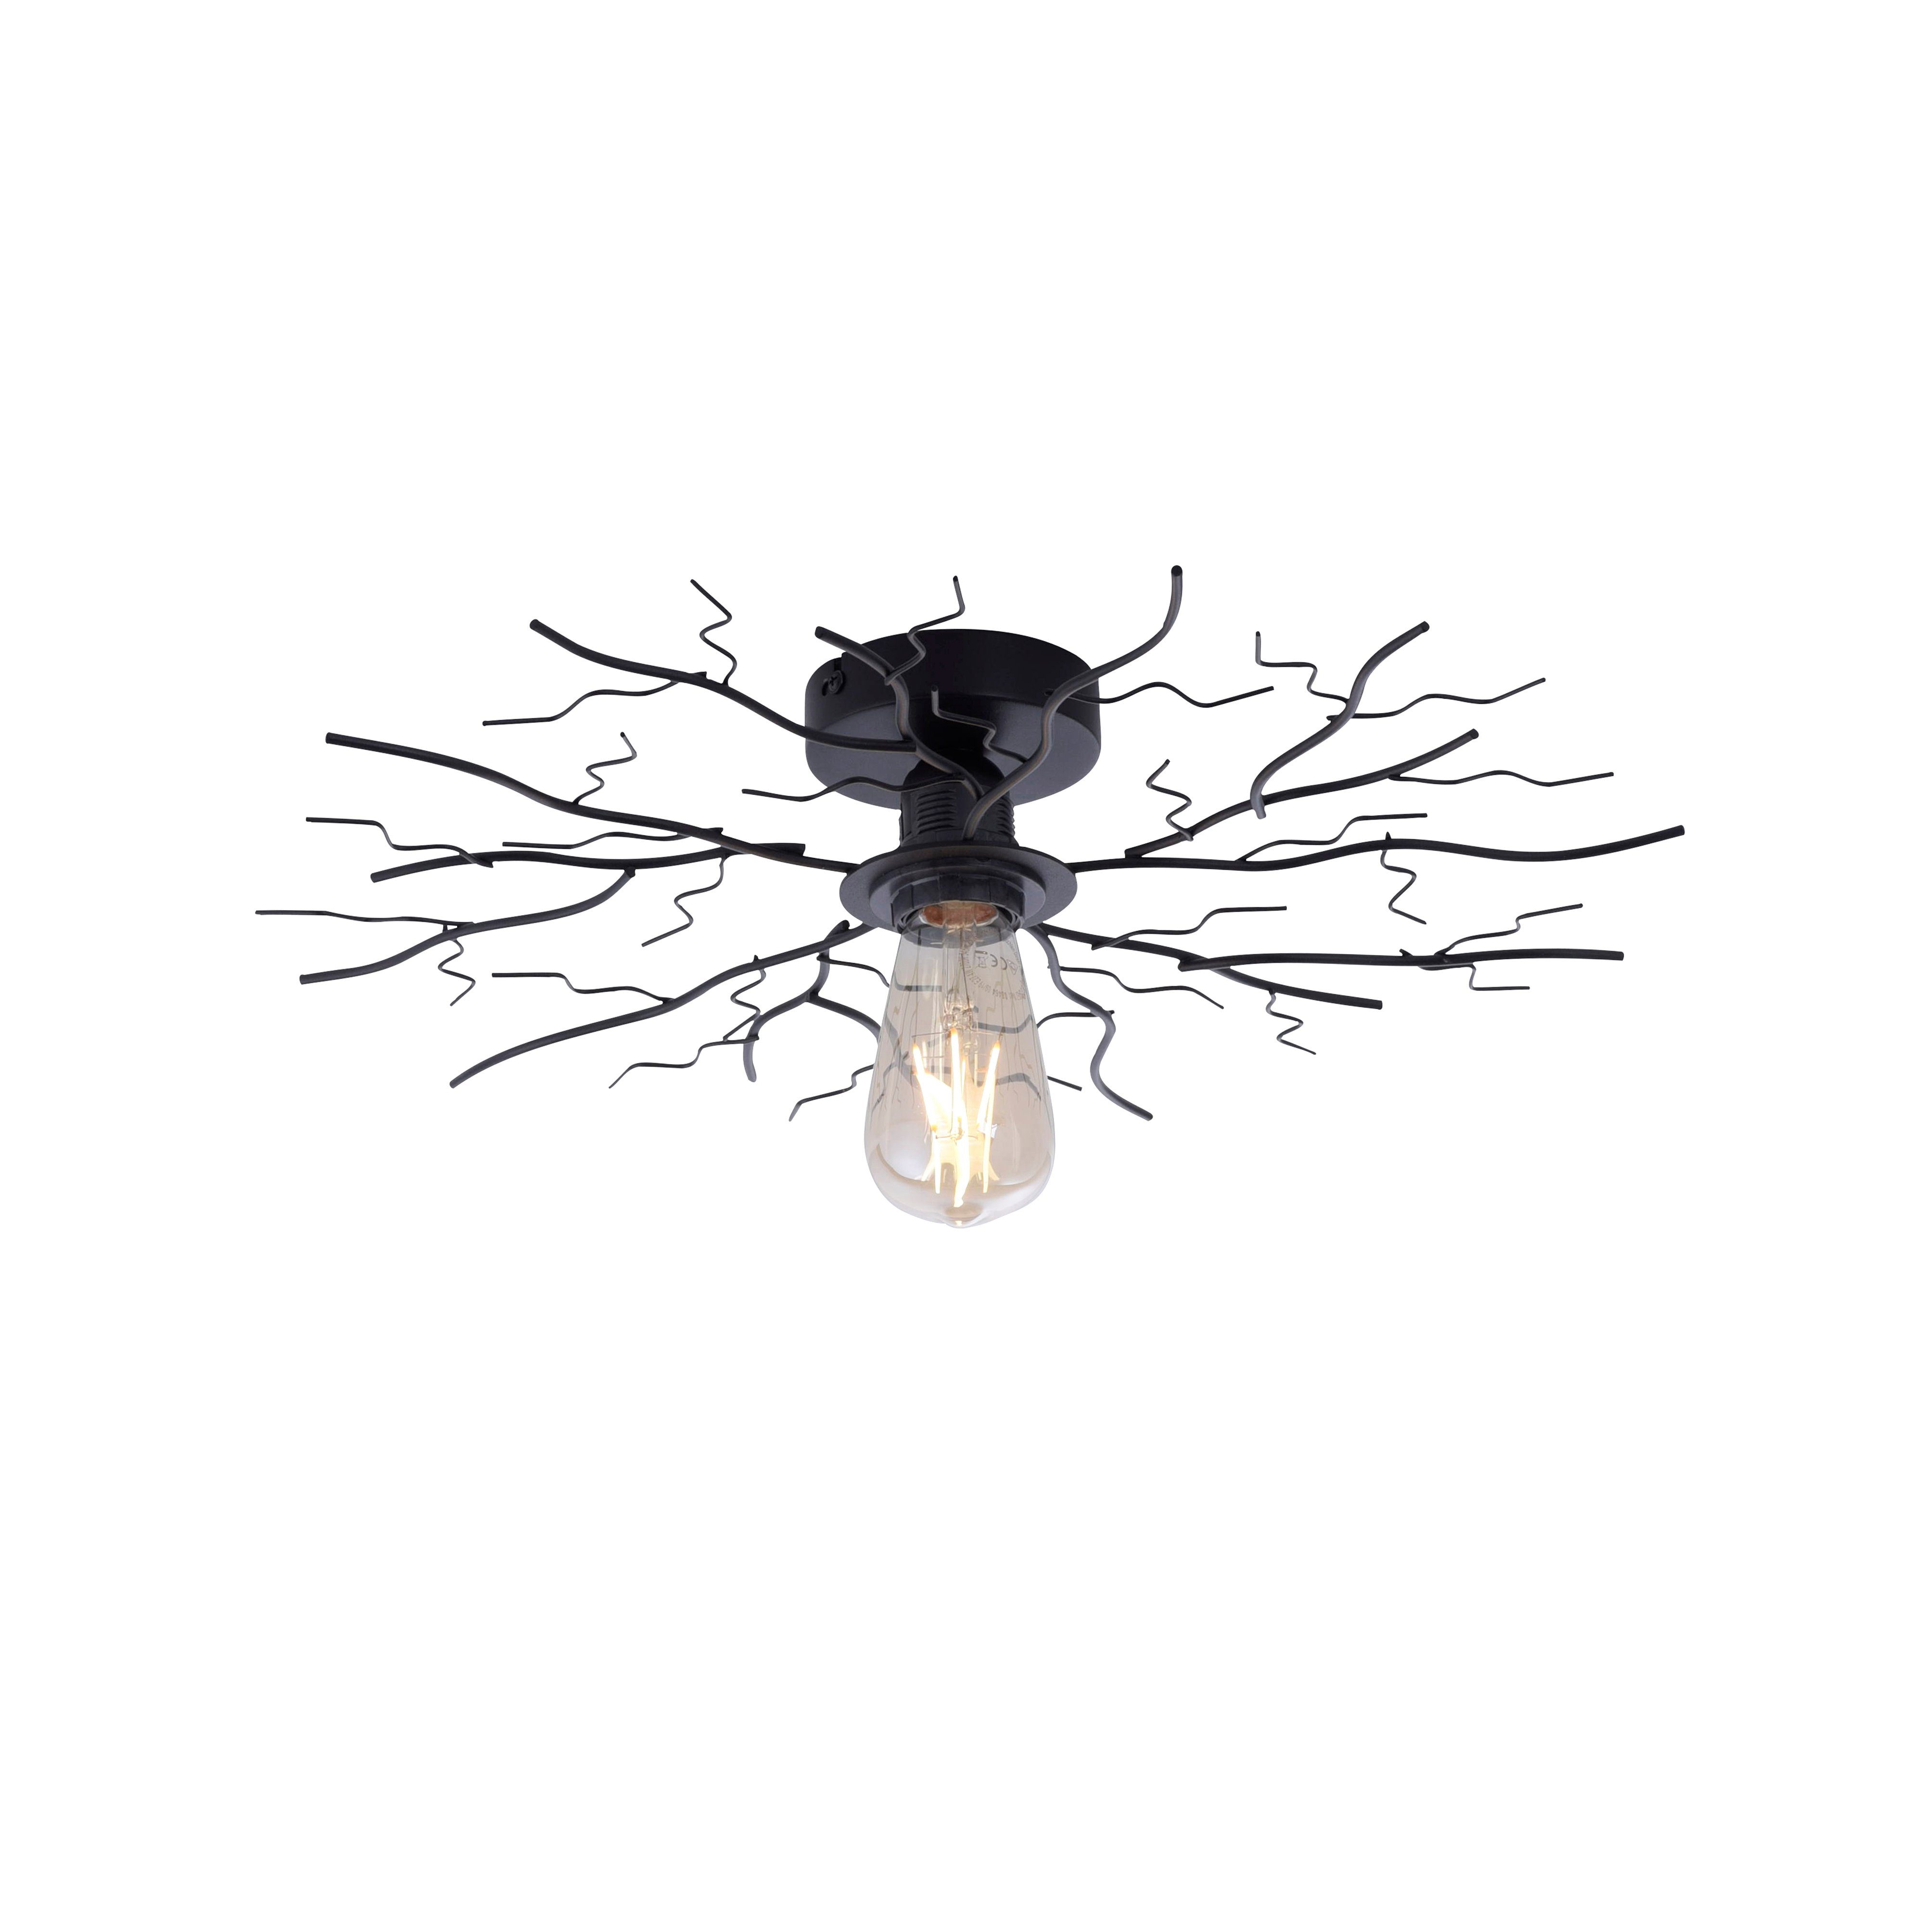 LED Deckenlampe LAMI 2 flammig Holz schwarz Metallschirme drehbar Wandlampe